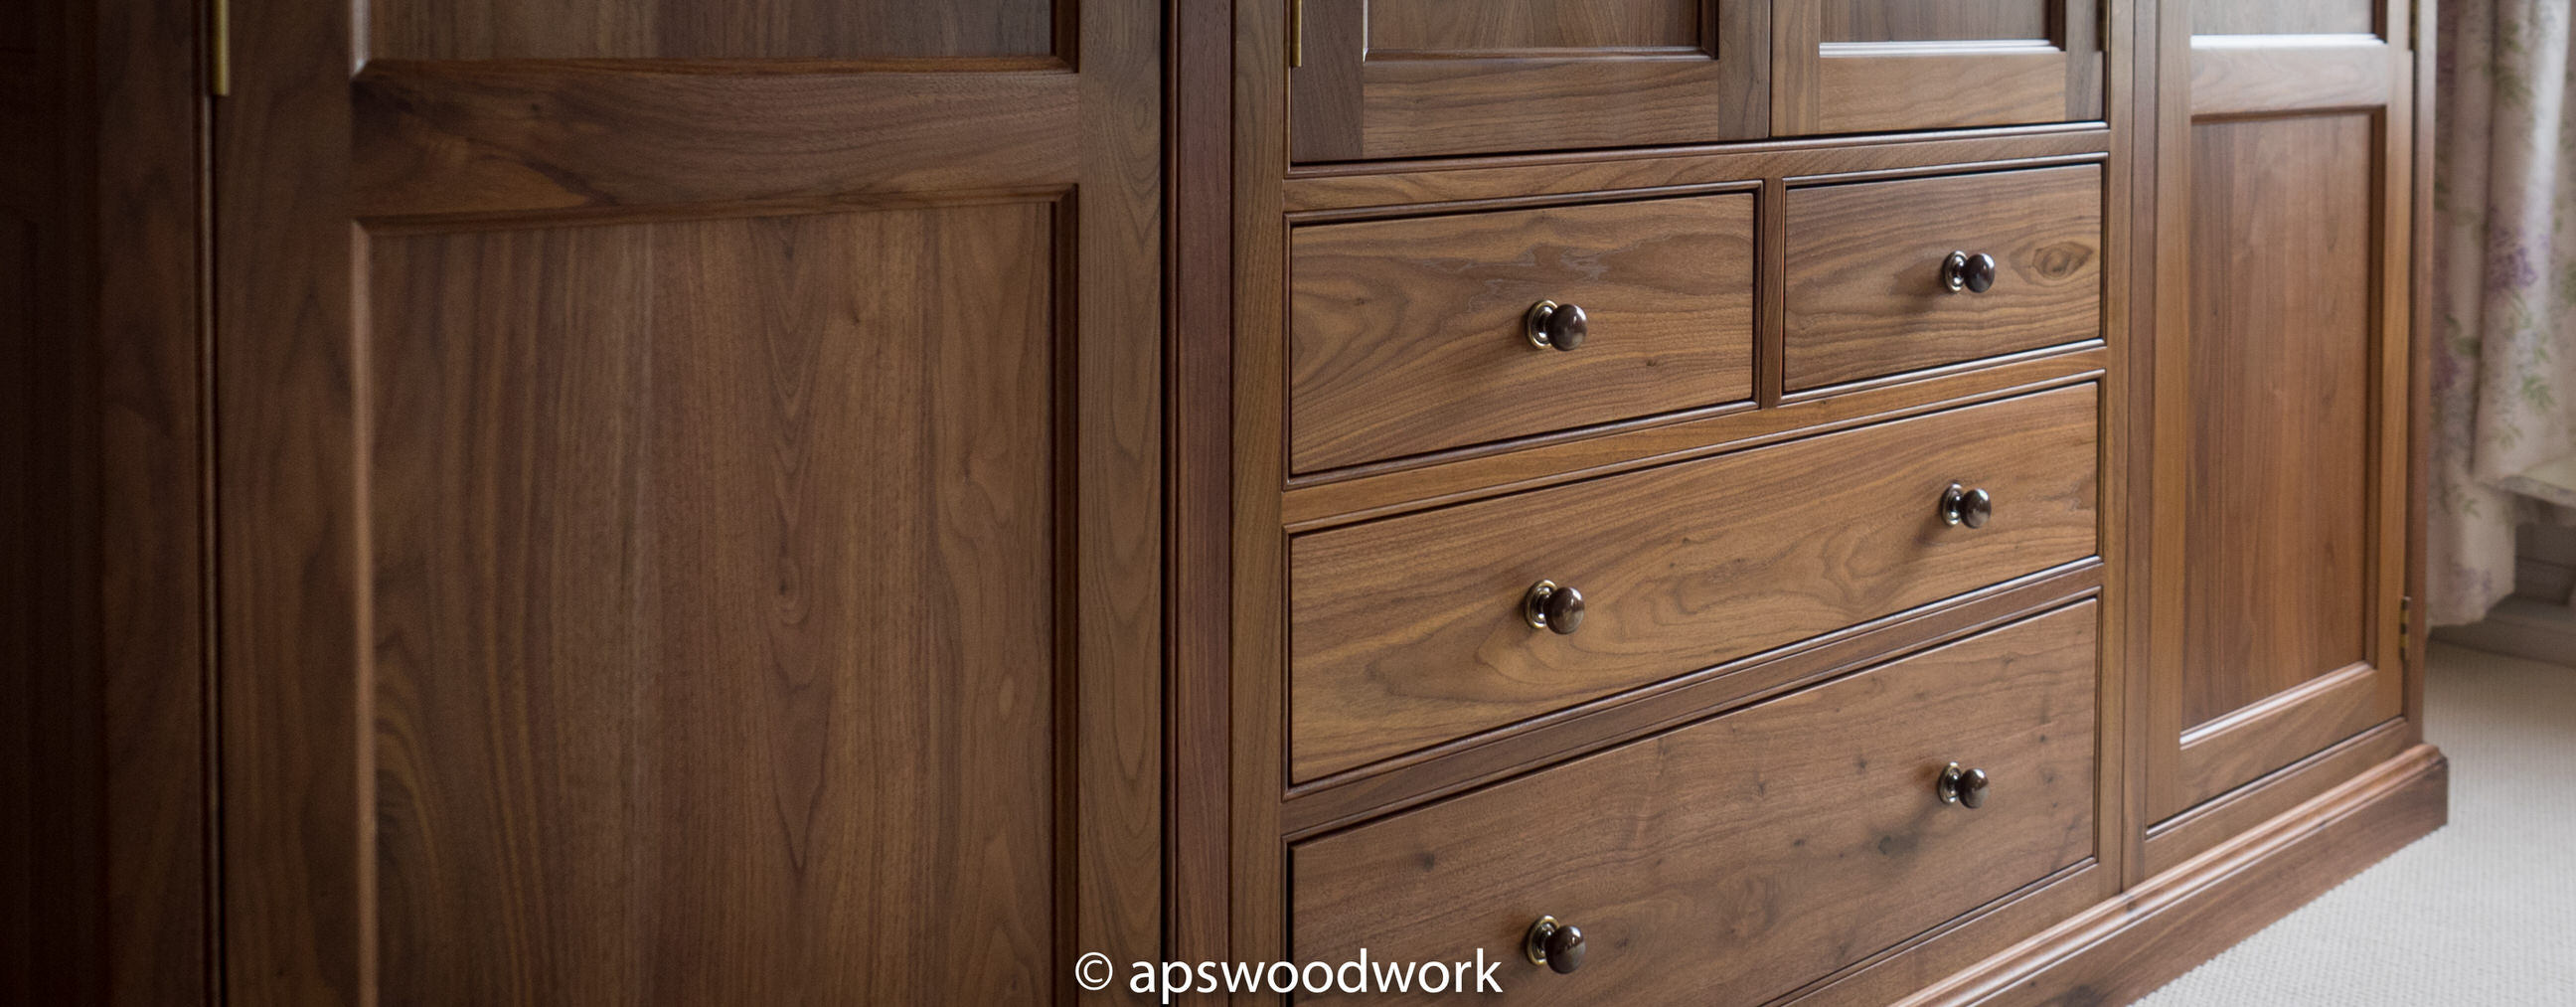 APS Woodwork Ltd